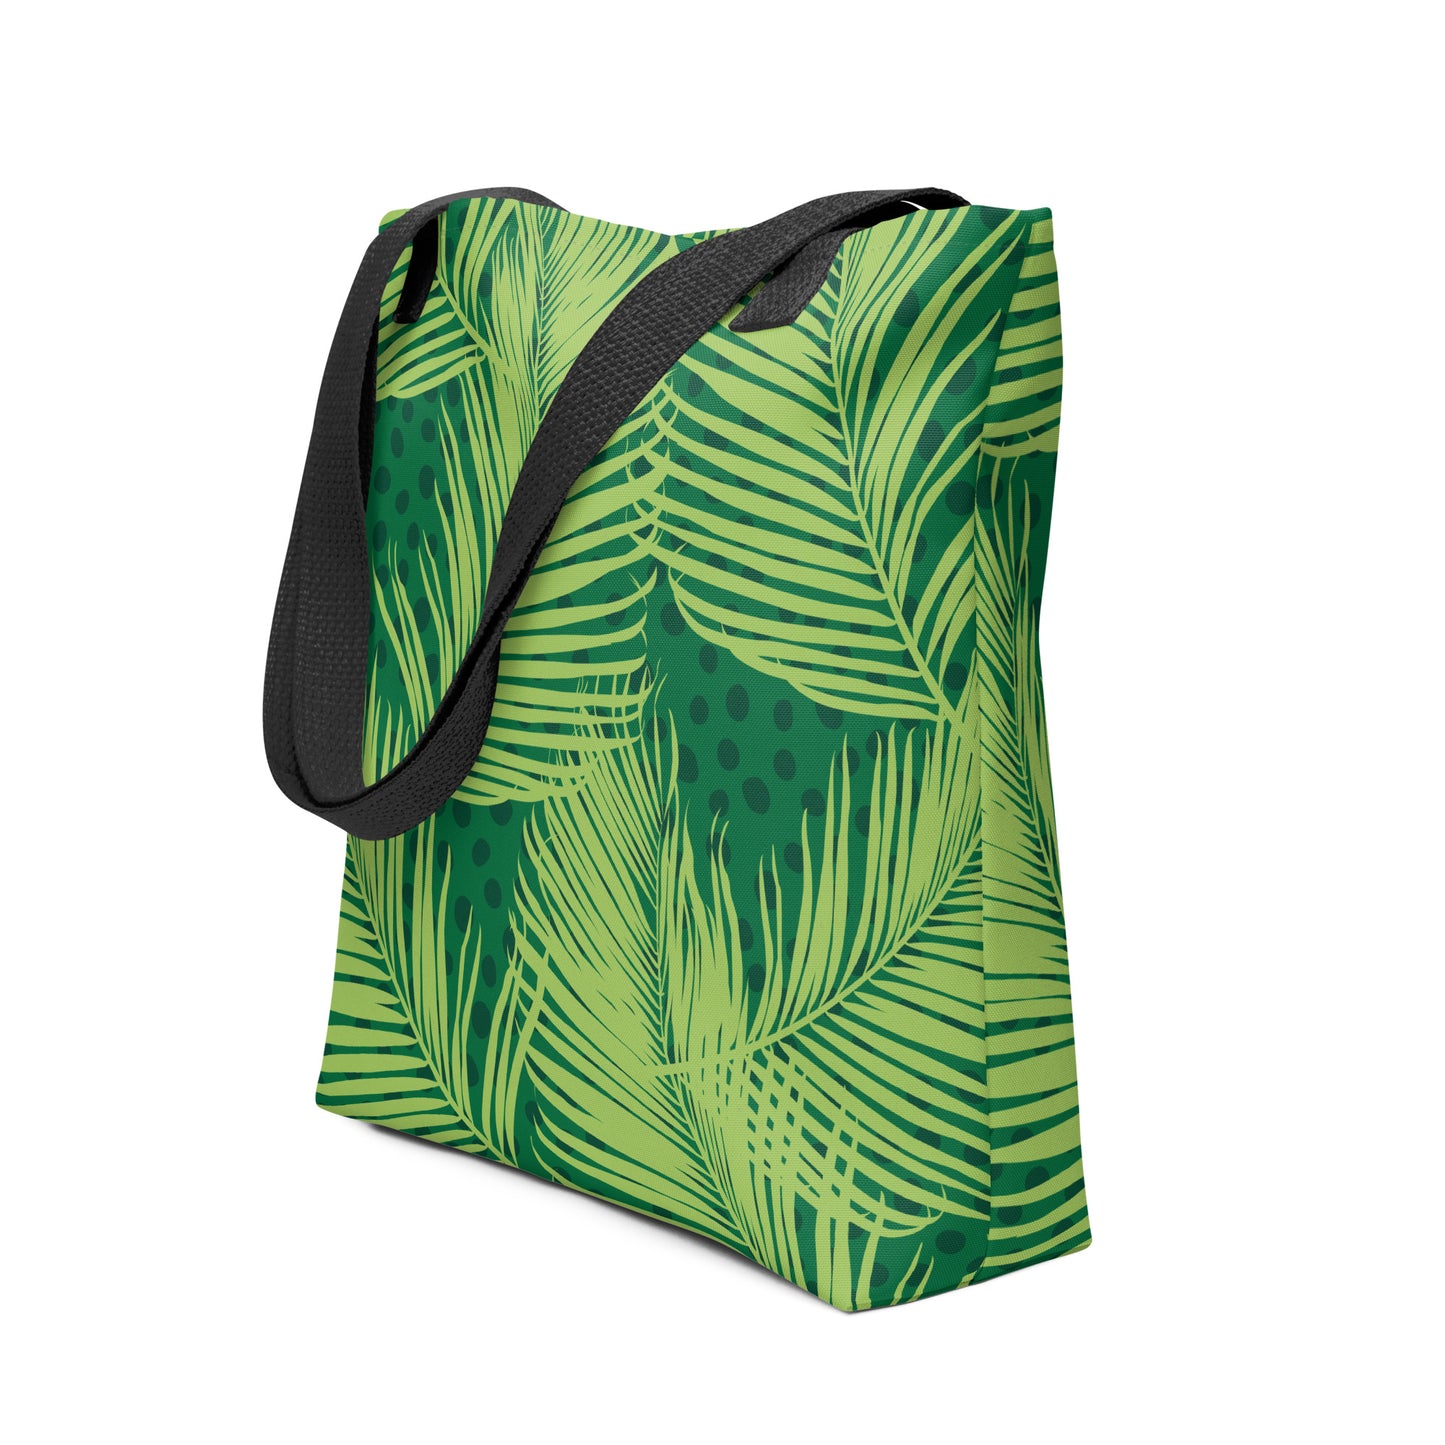 Tote bag - Green Leaf Pattern